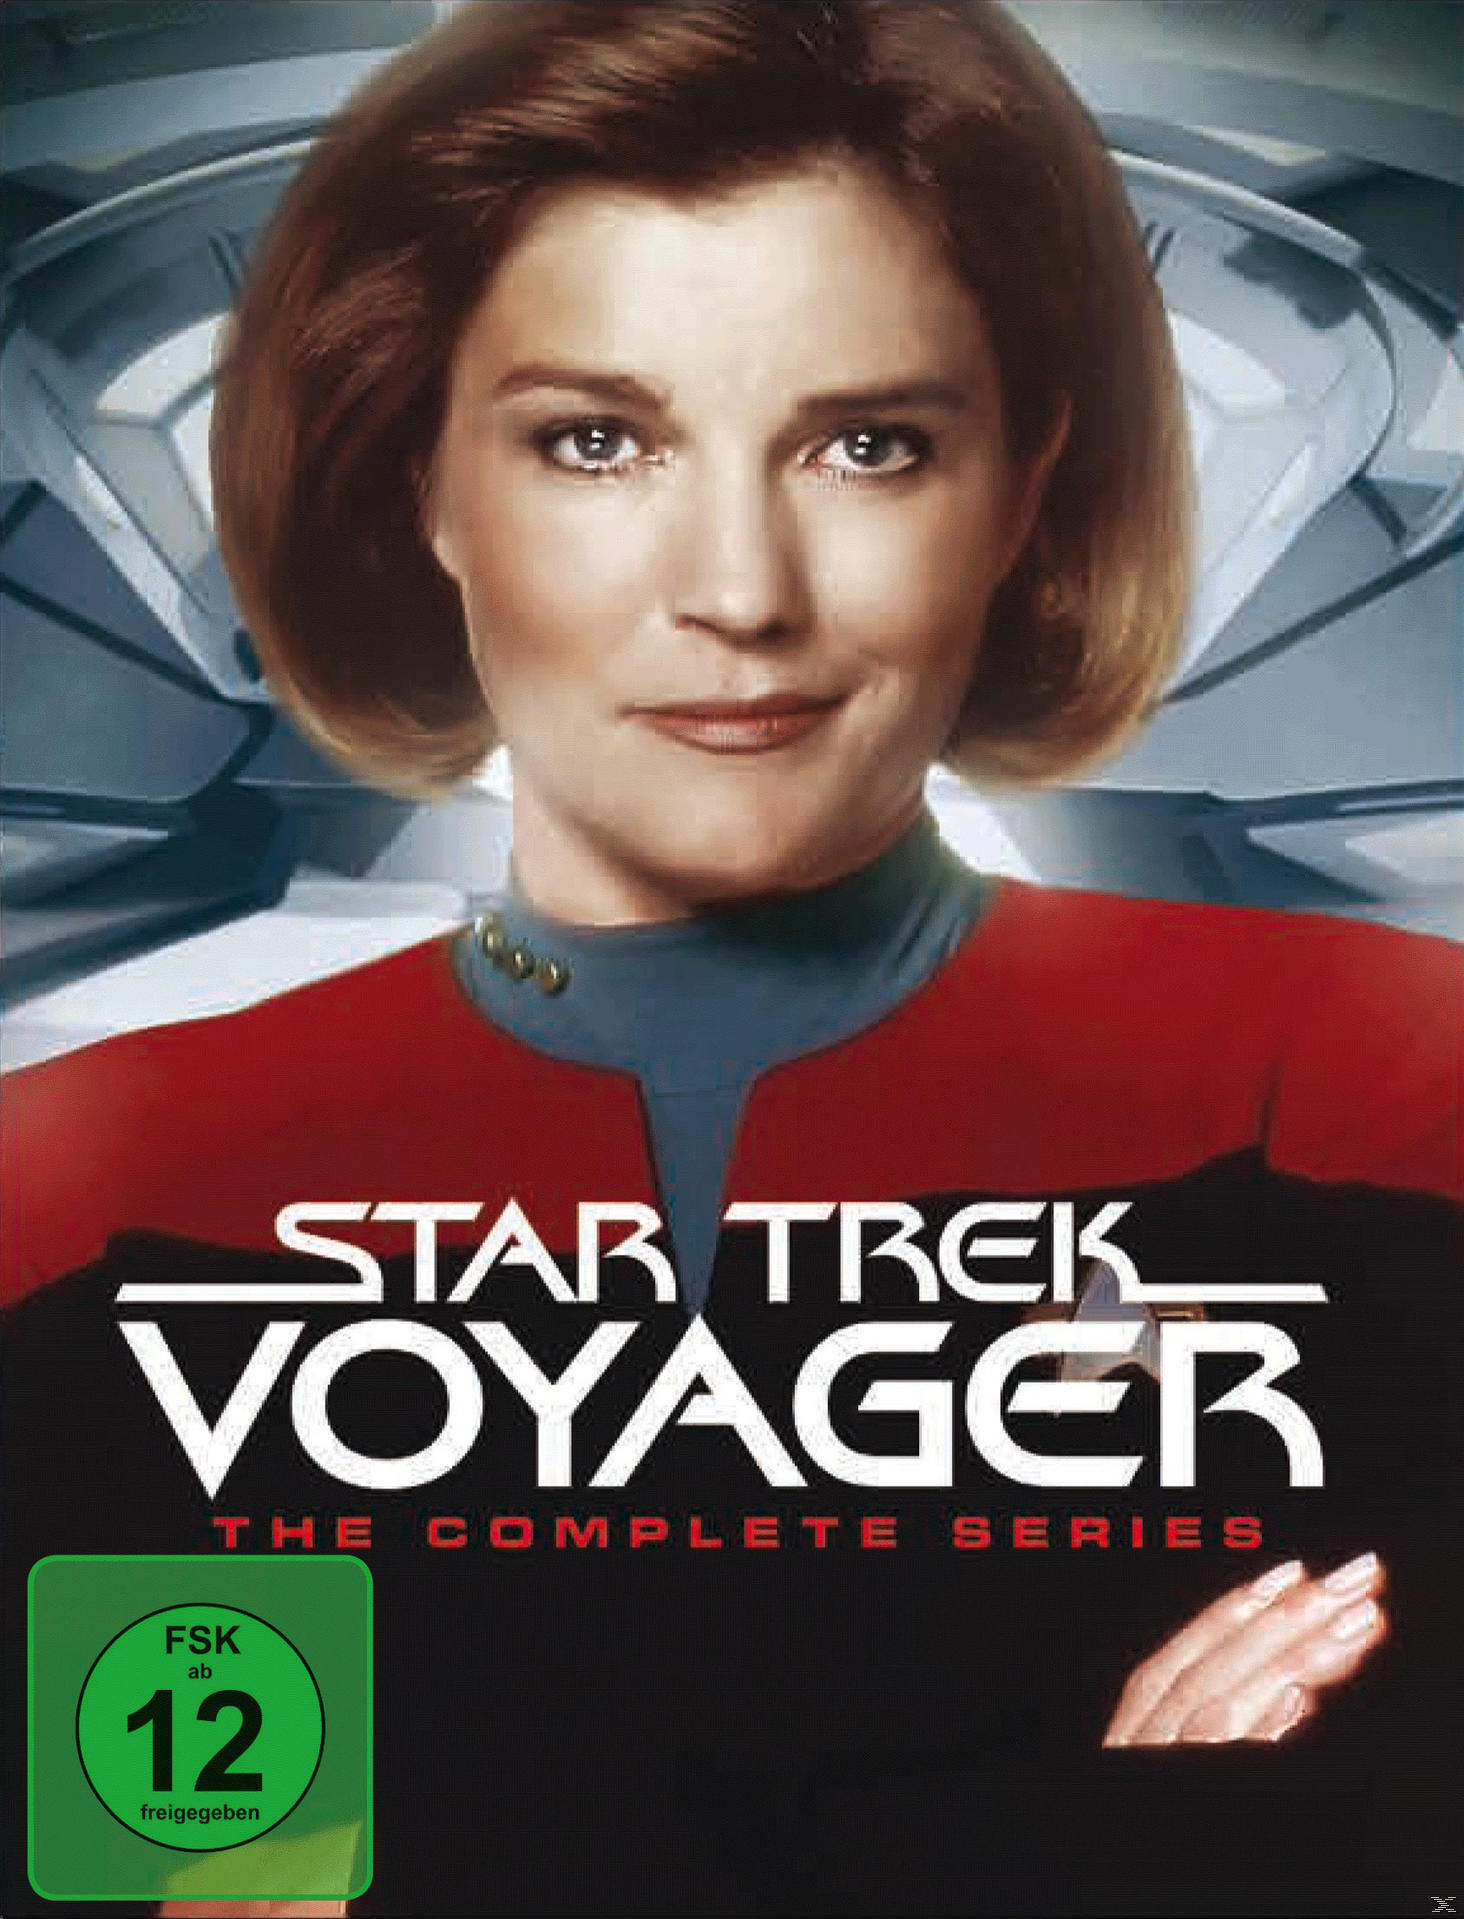 STAR TREK: Voyager Boxset - Complete DVD